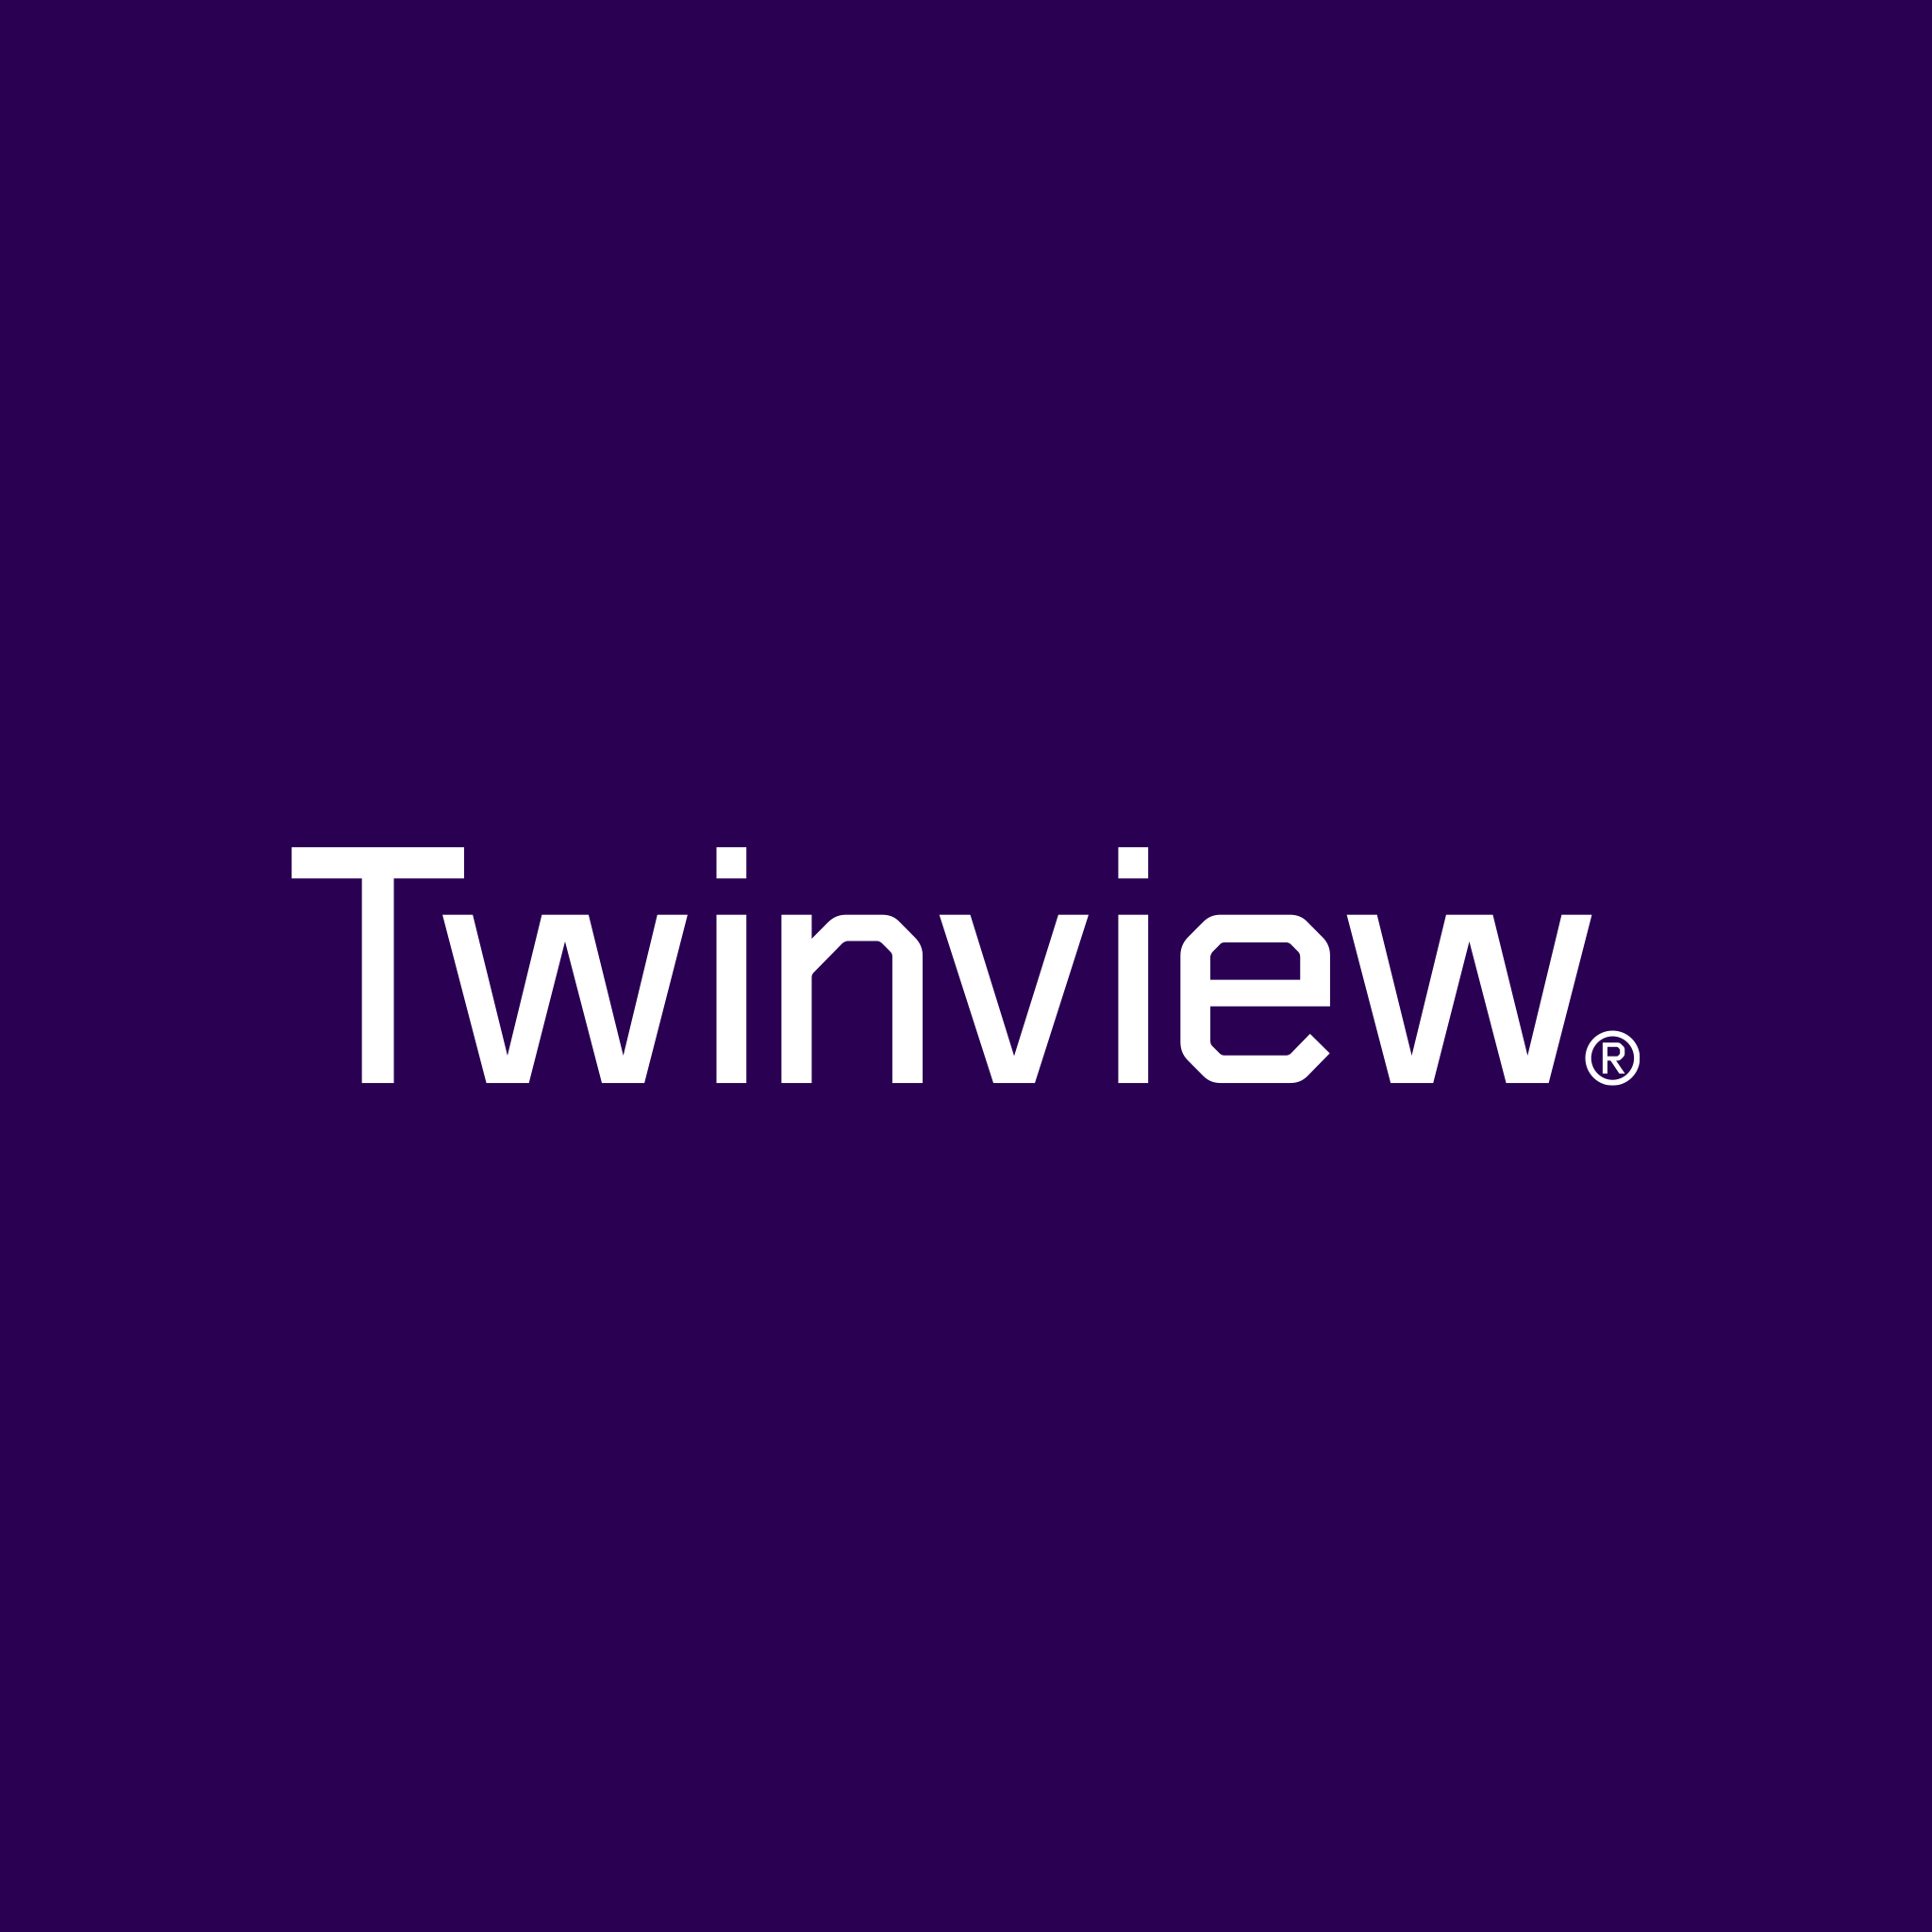 Twinview